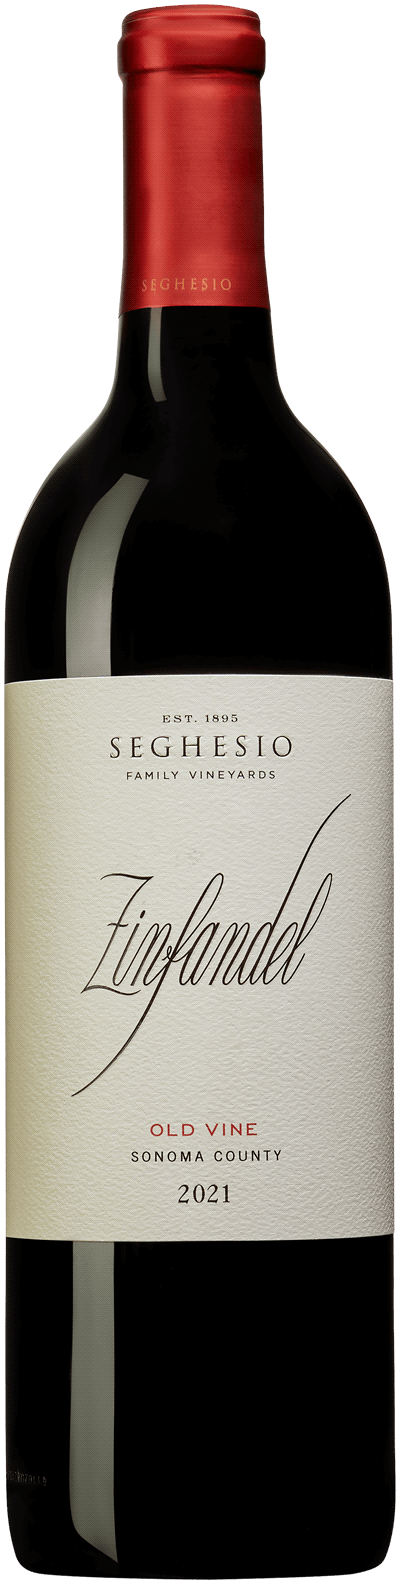 Old Vine Zinfandel Seghesio Family Vineyards, 2021